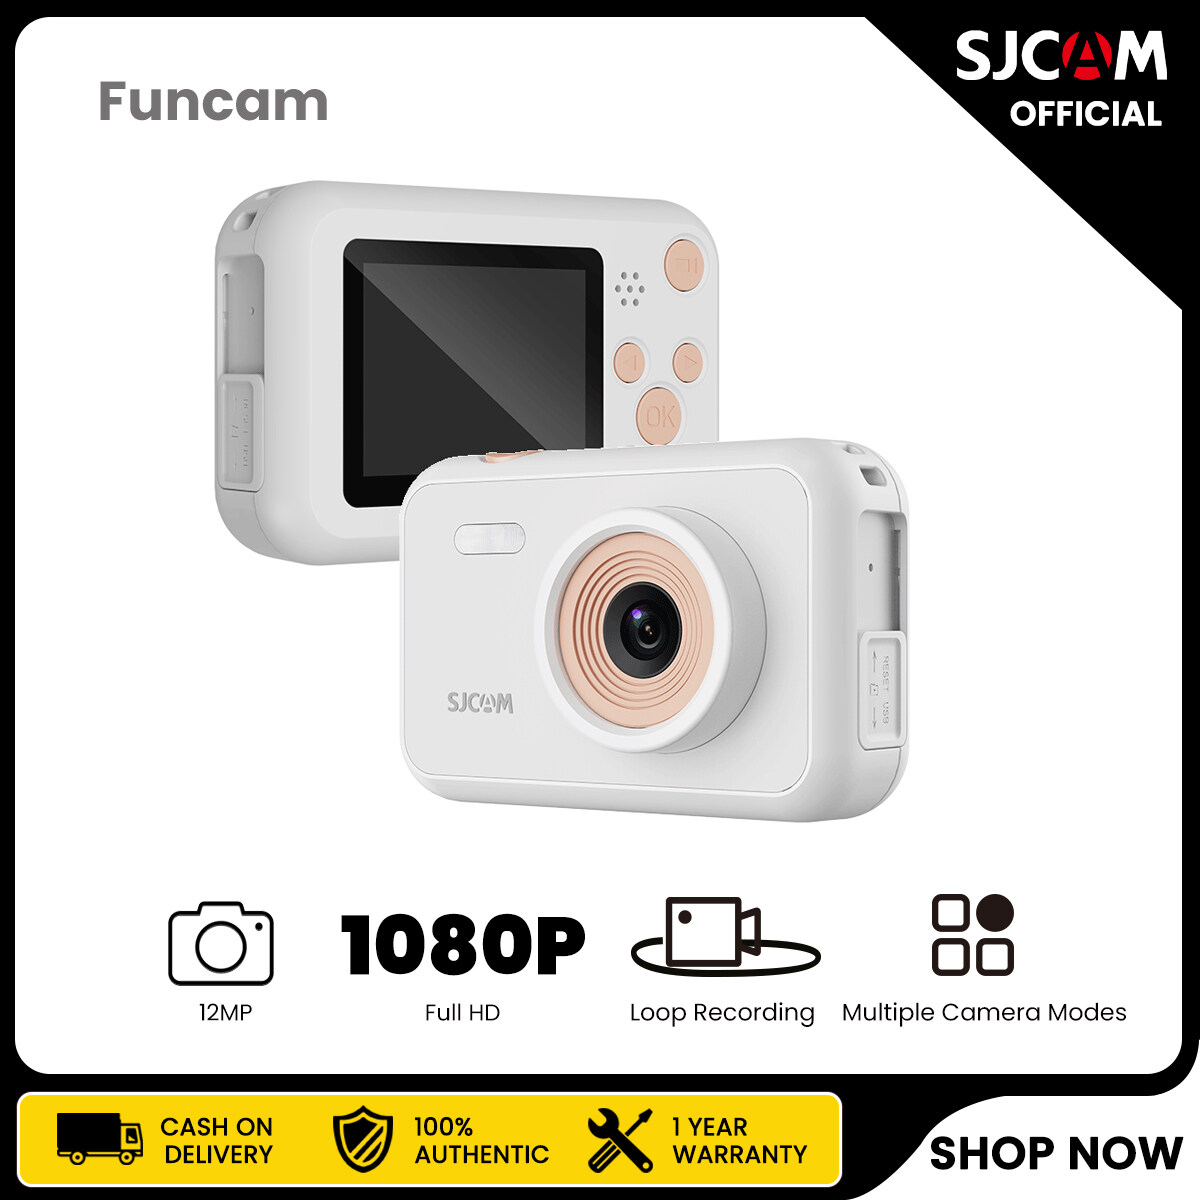 SJCAM FunCam 1080P High Resolution Kids Digital Camera Portable Mini